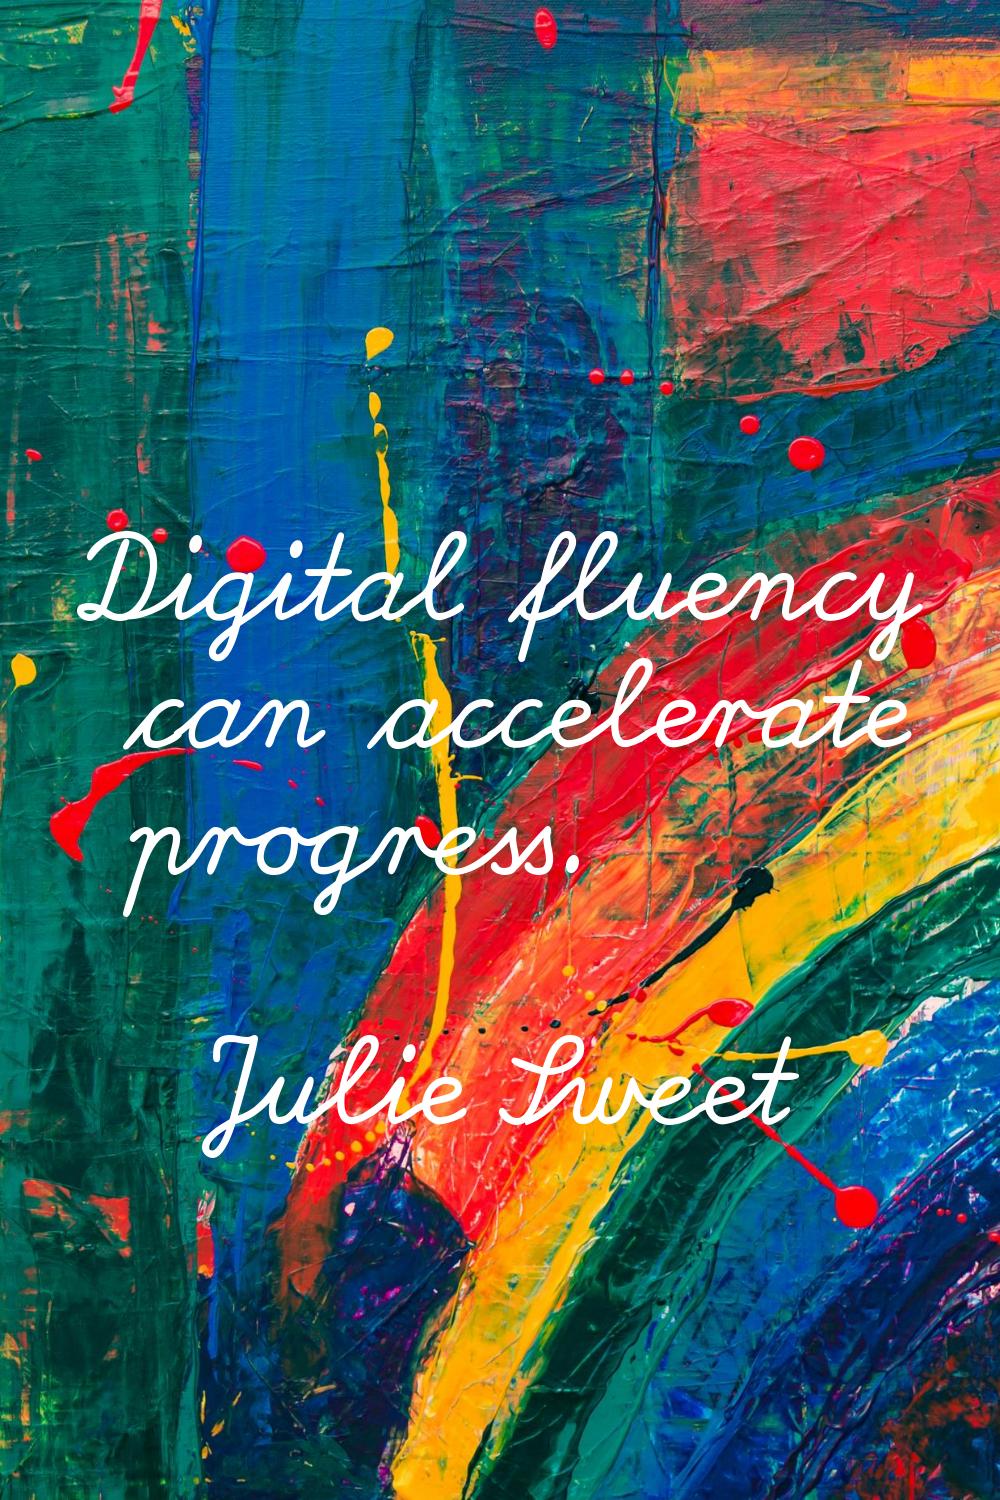 Digital fluency can accelerate progress.